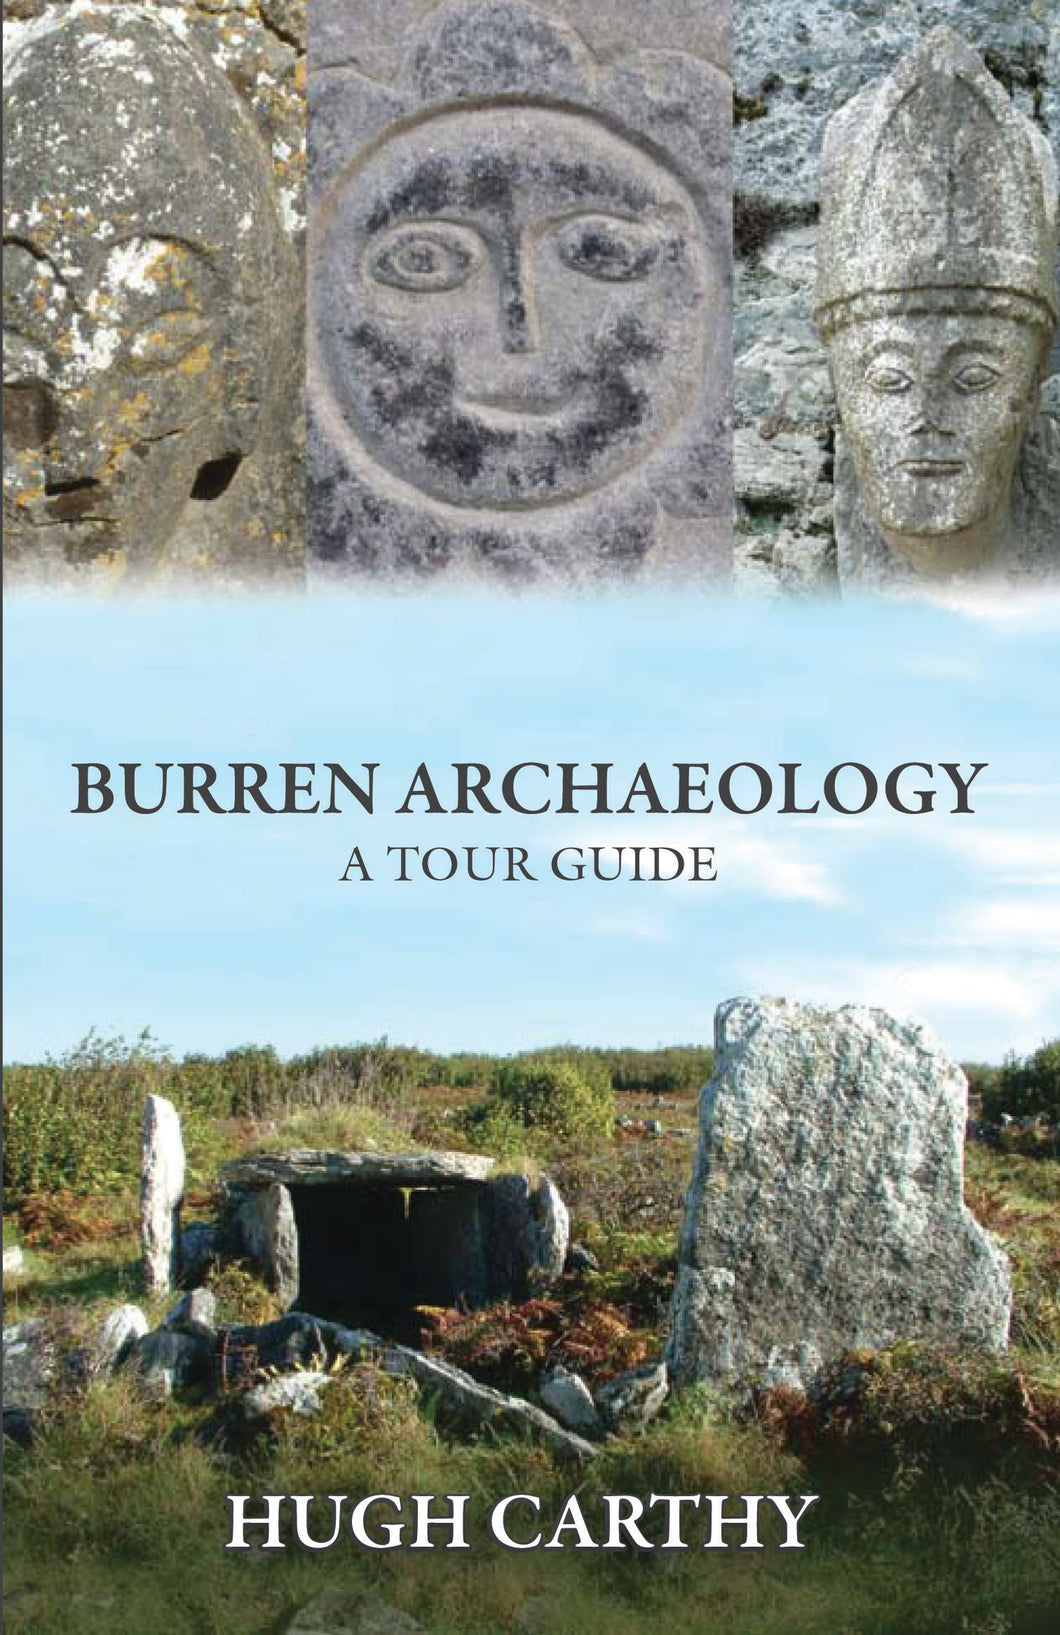 Burren Archaeology - A Tour Guide